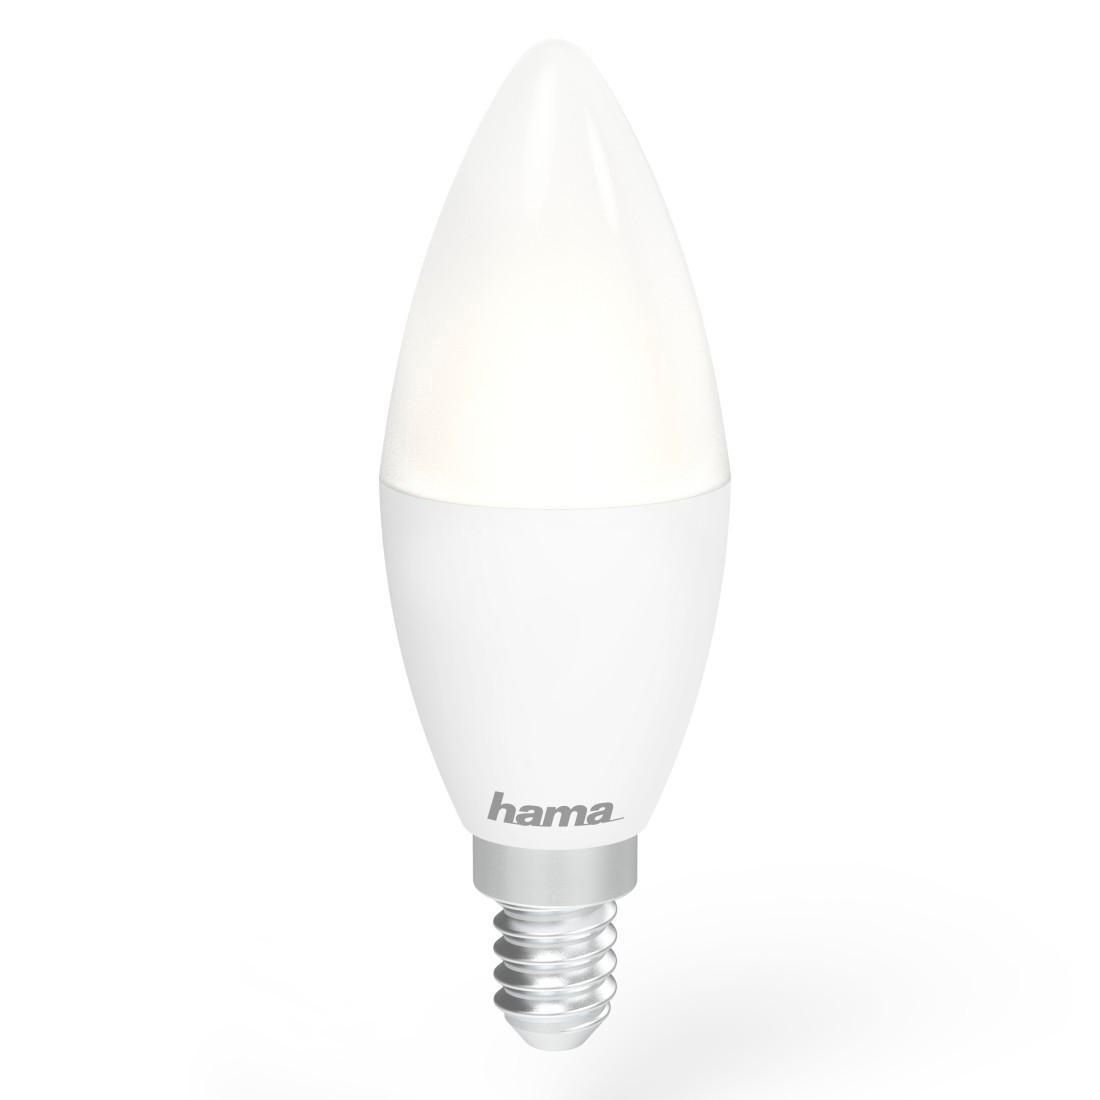 WLAN-LED Warmweiß HAMA Pack, 5.5 E14, bis Tageslicht W, 4er Lampe